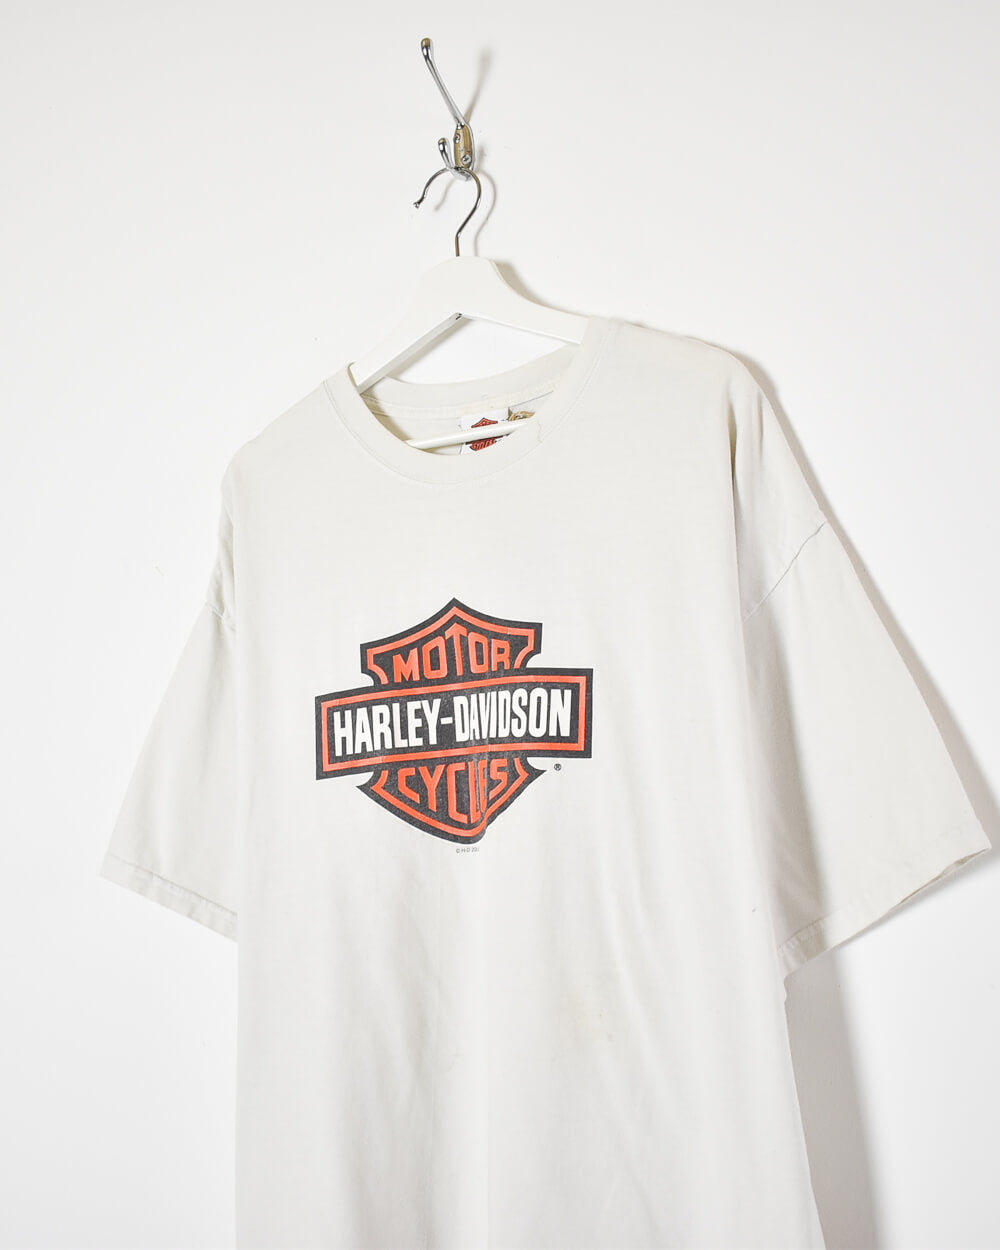 White Harley Davidson Motorcycles T-Shirt - XX-Large